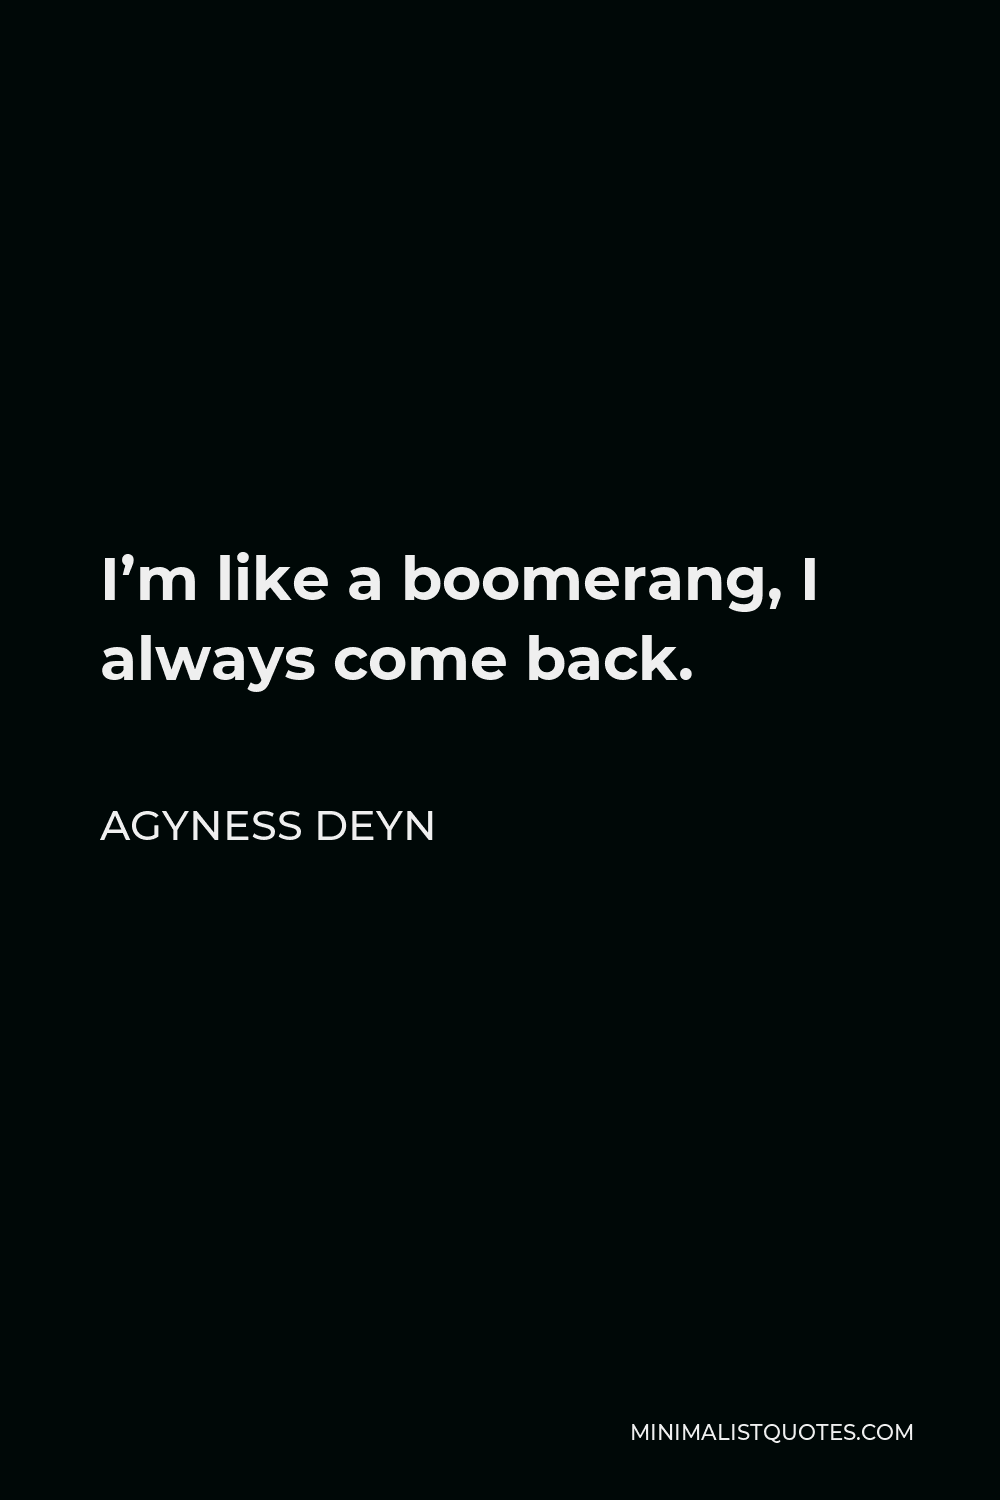 Agyness Deyn Quote - I’m like a boomerang, I always come back.